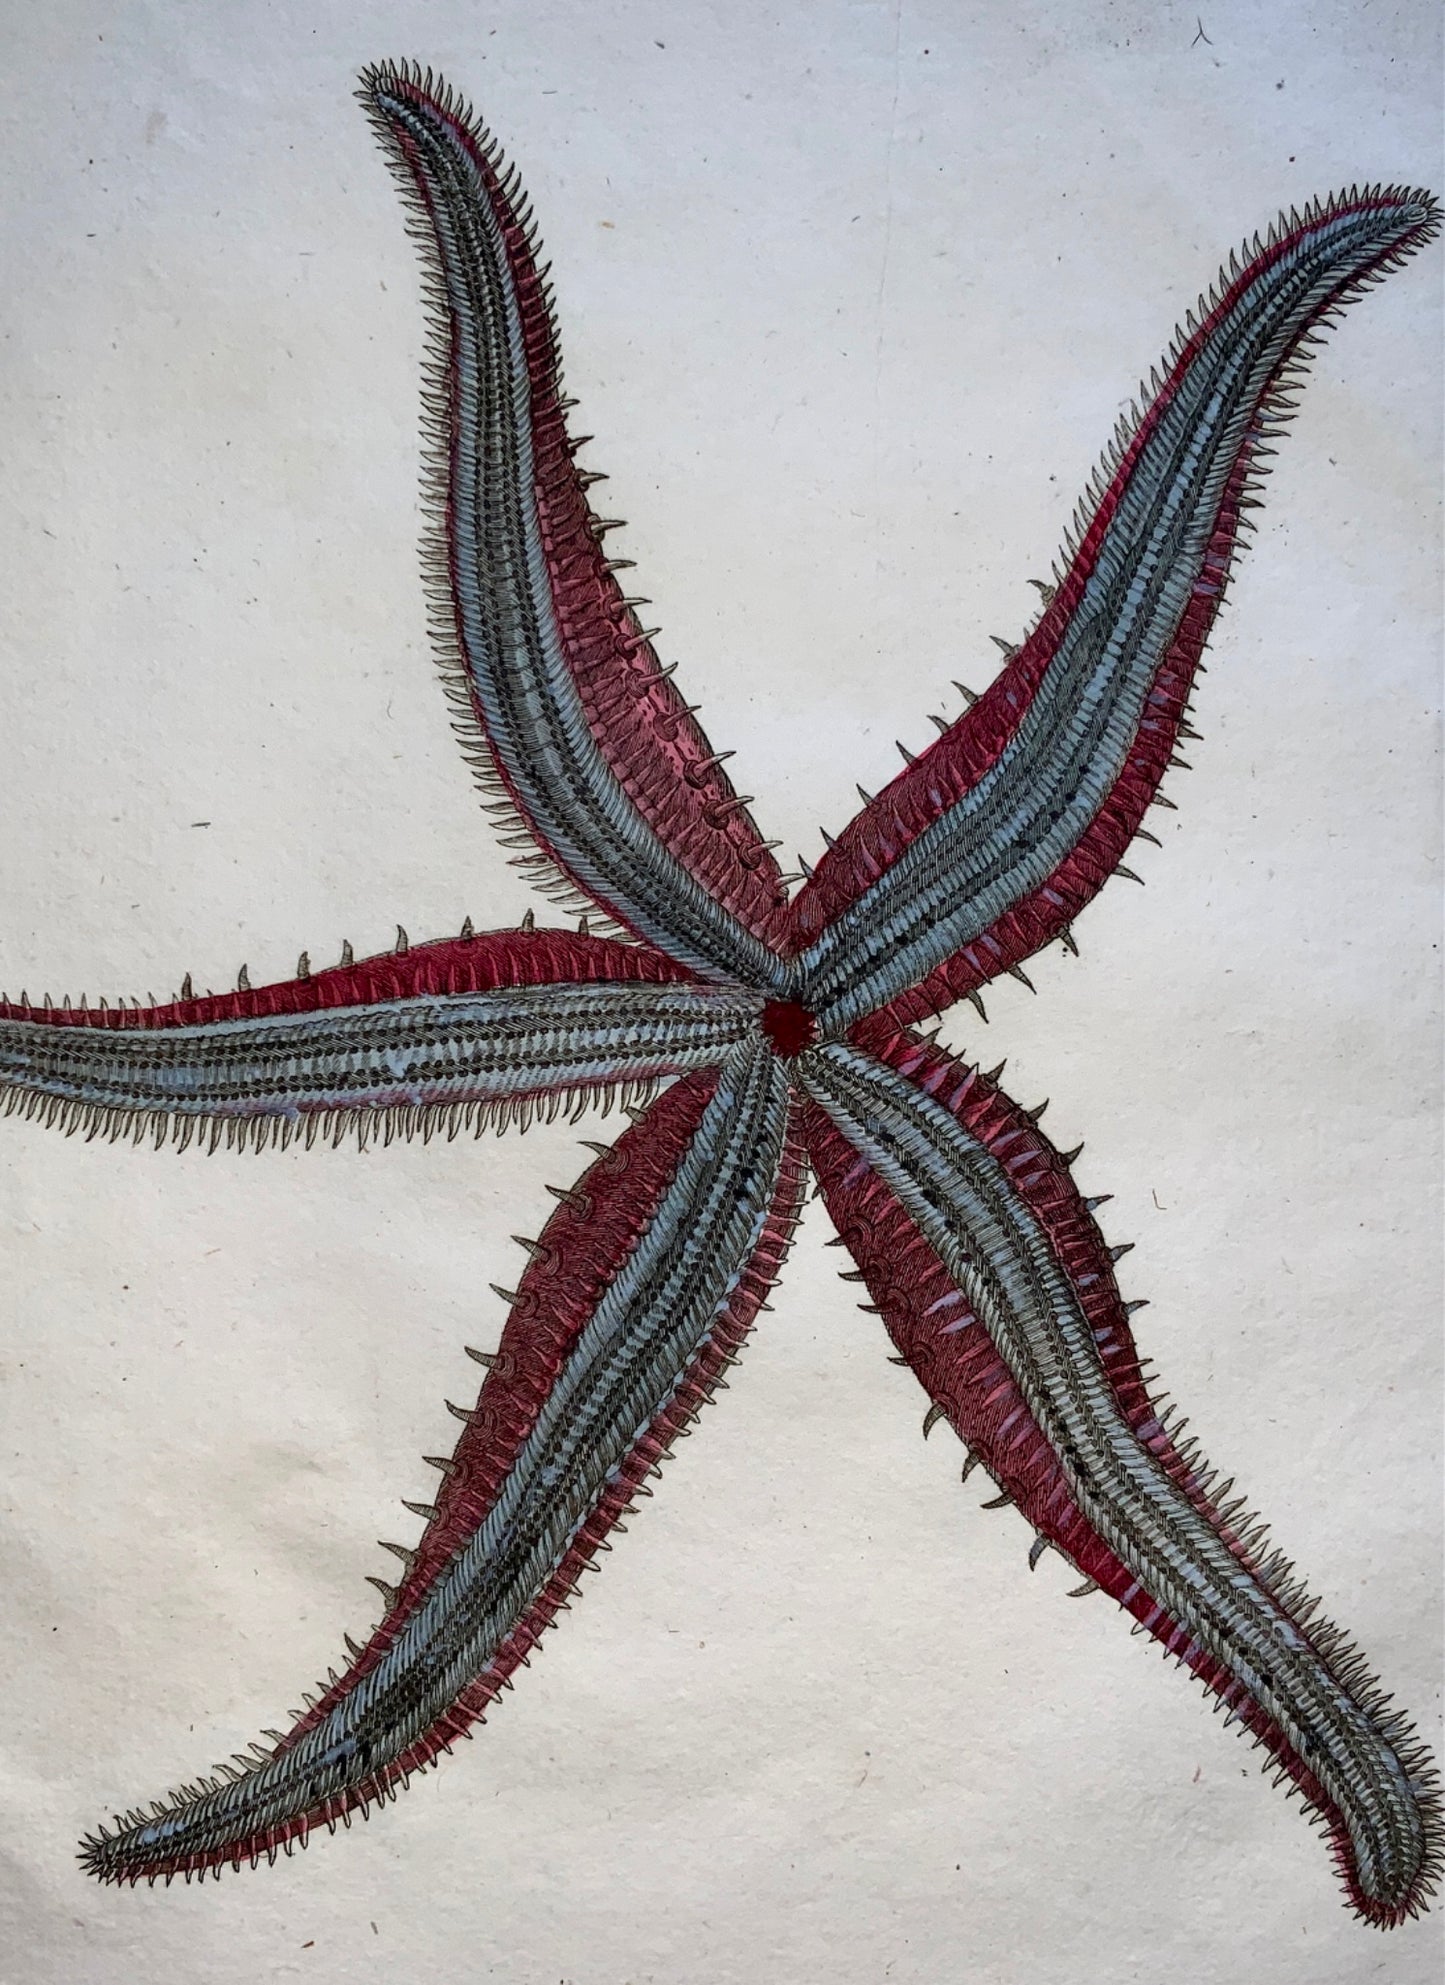 1789 Scattaglia - Asterias Sea Star STARFISH Marine Echinodermes - Hand colour